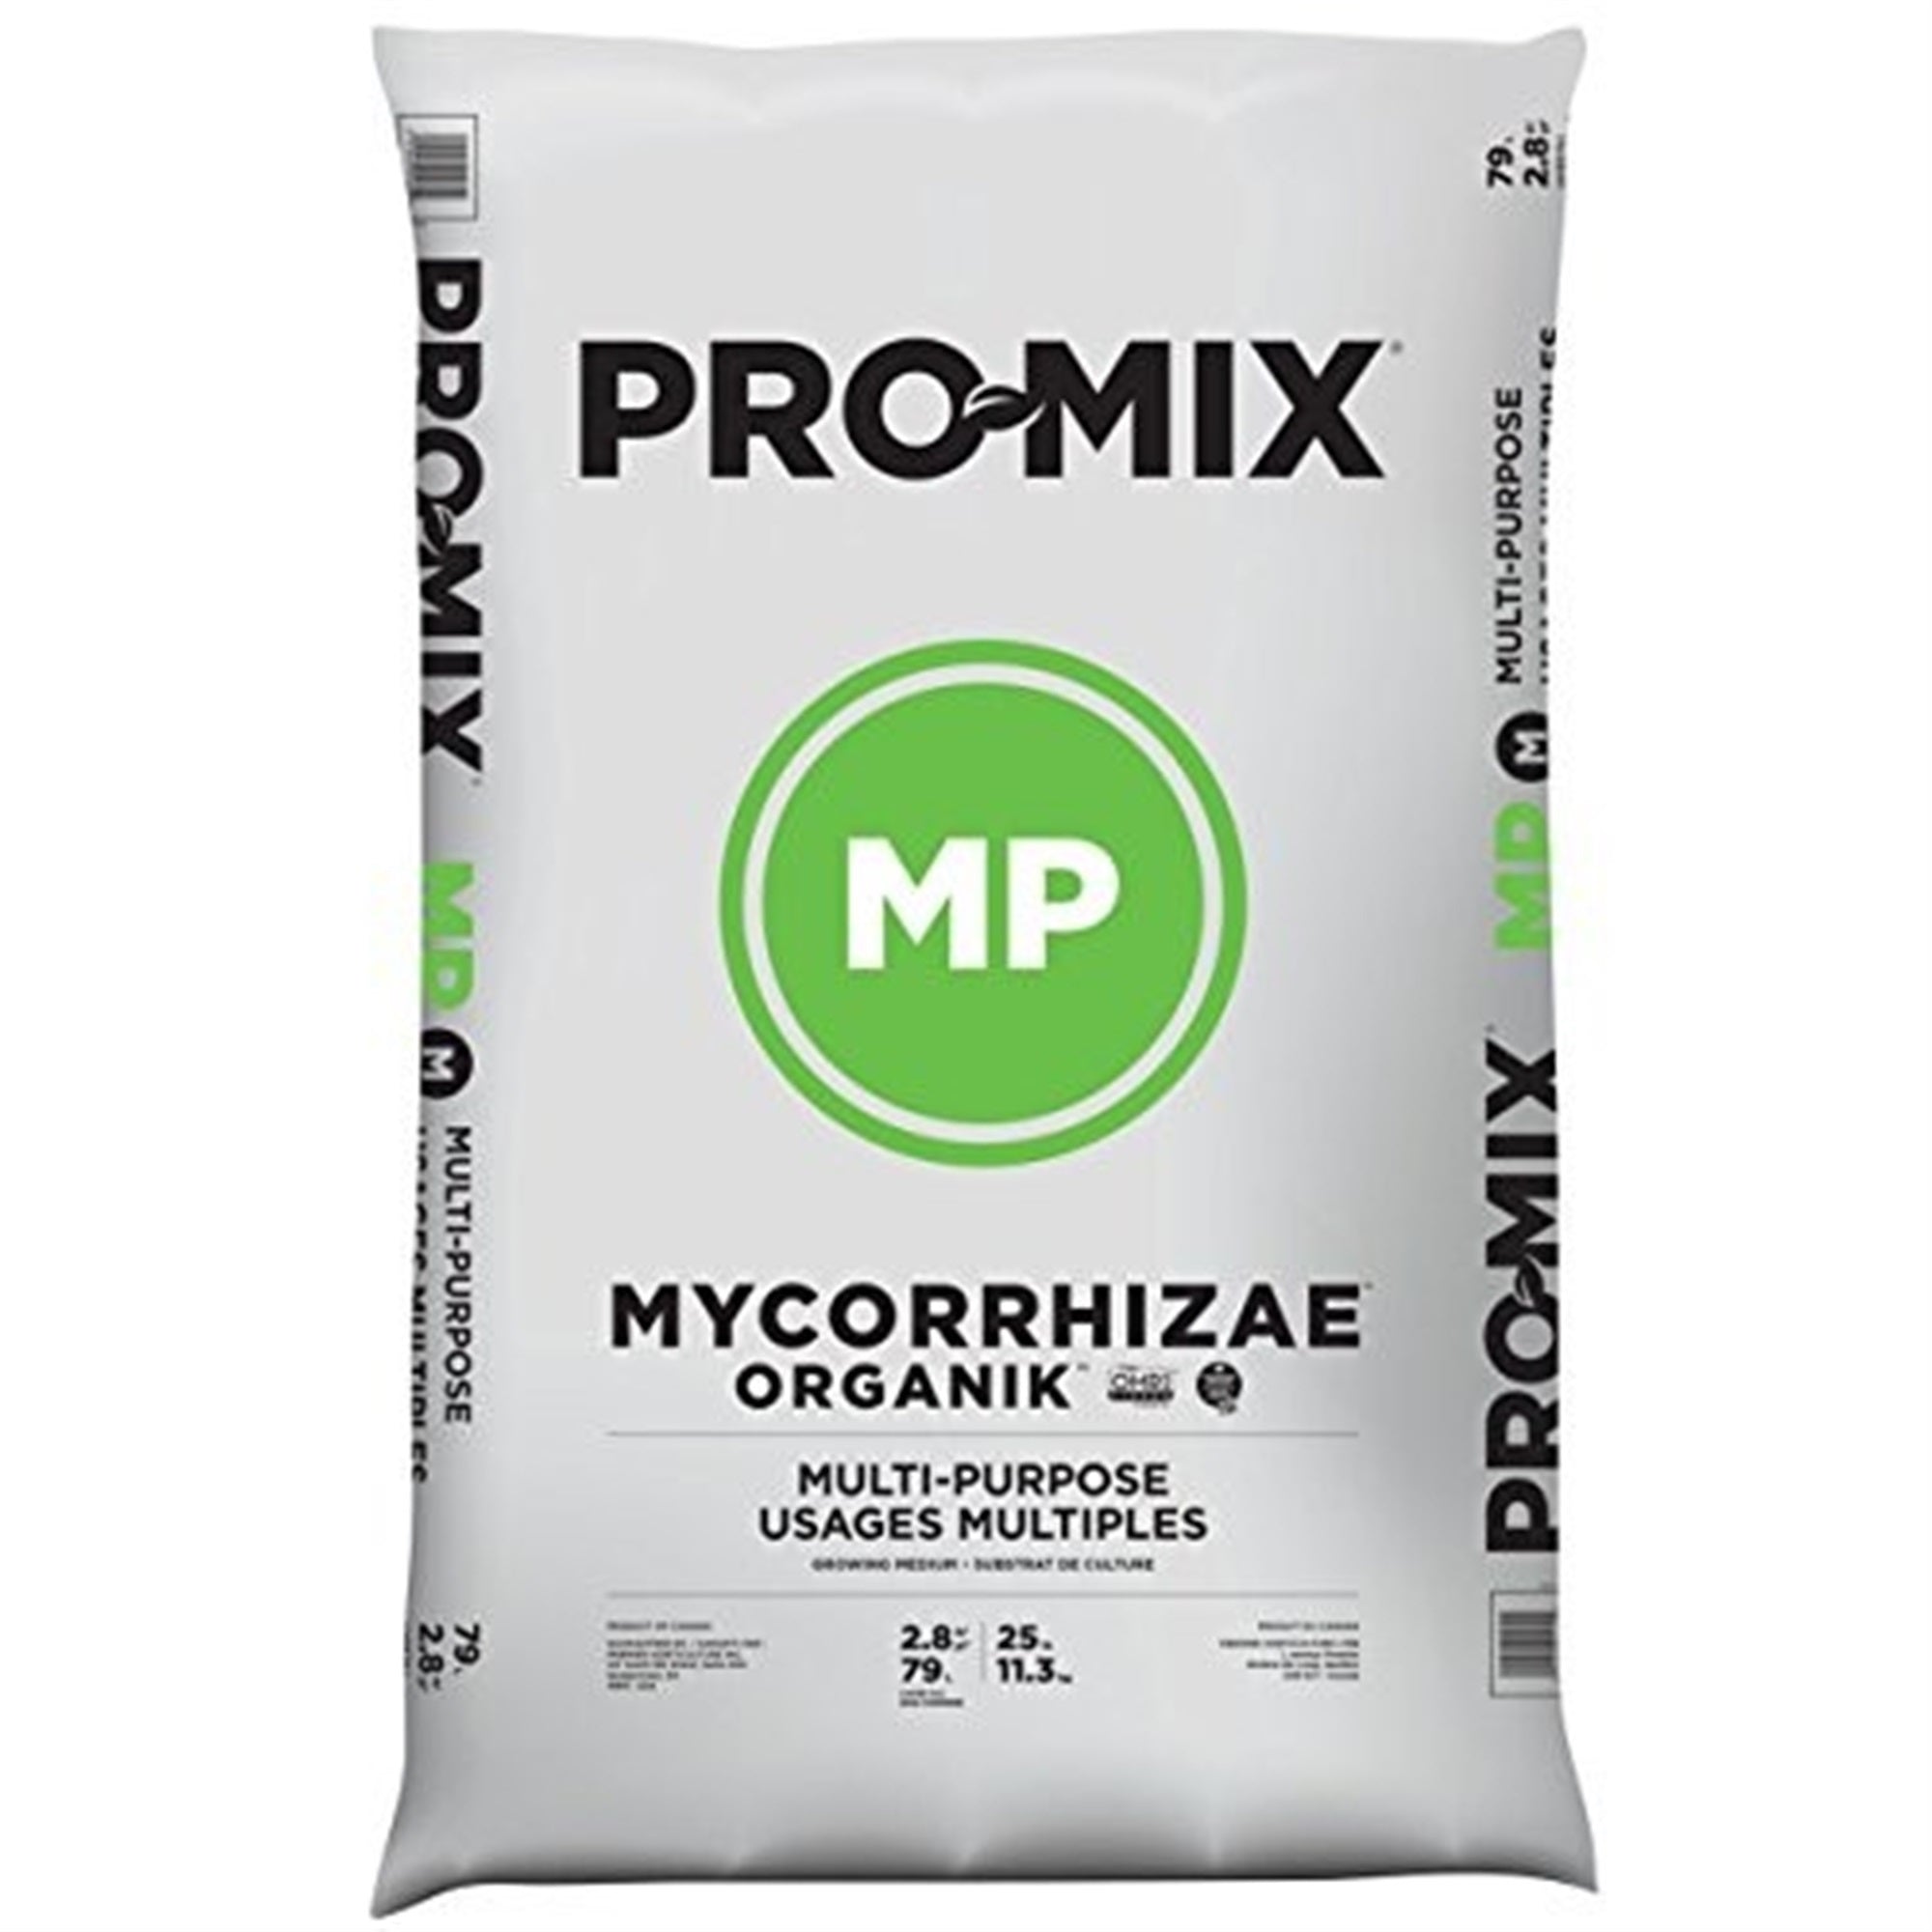 Premier Horticulture Pro-Mix MP Organik Mycorrhizae Multi-Purp. Grower Mix 2.8CF